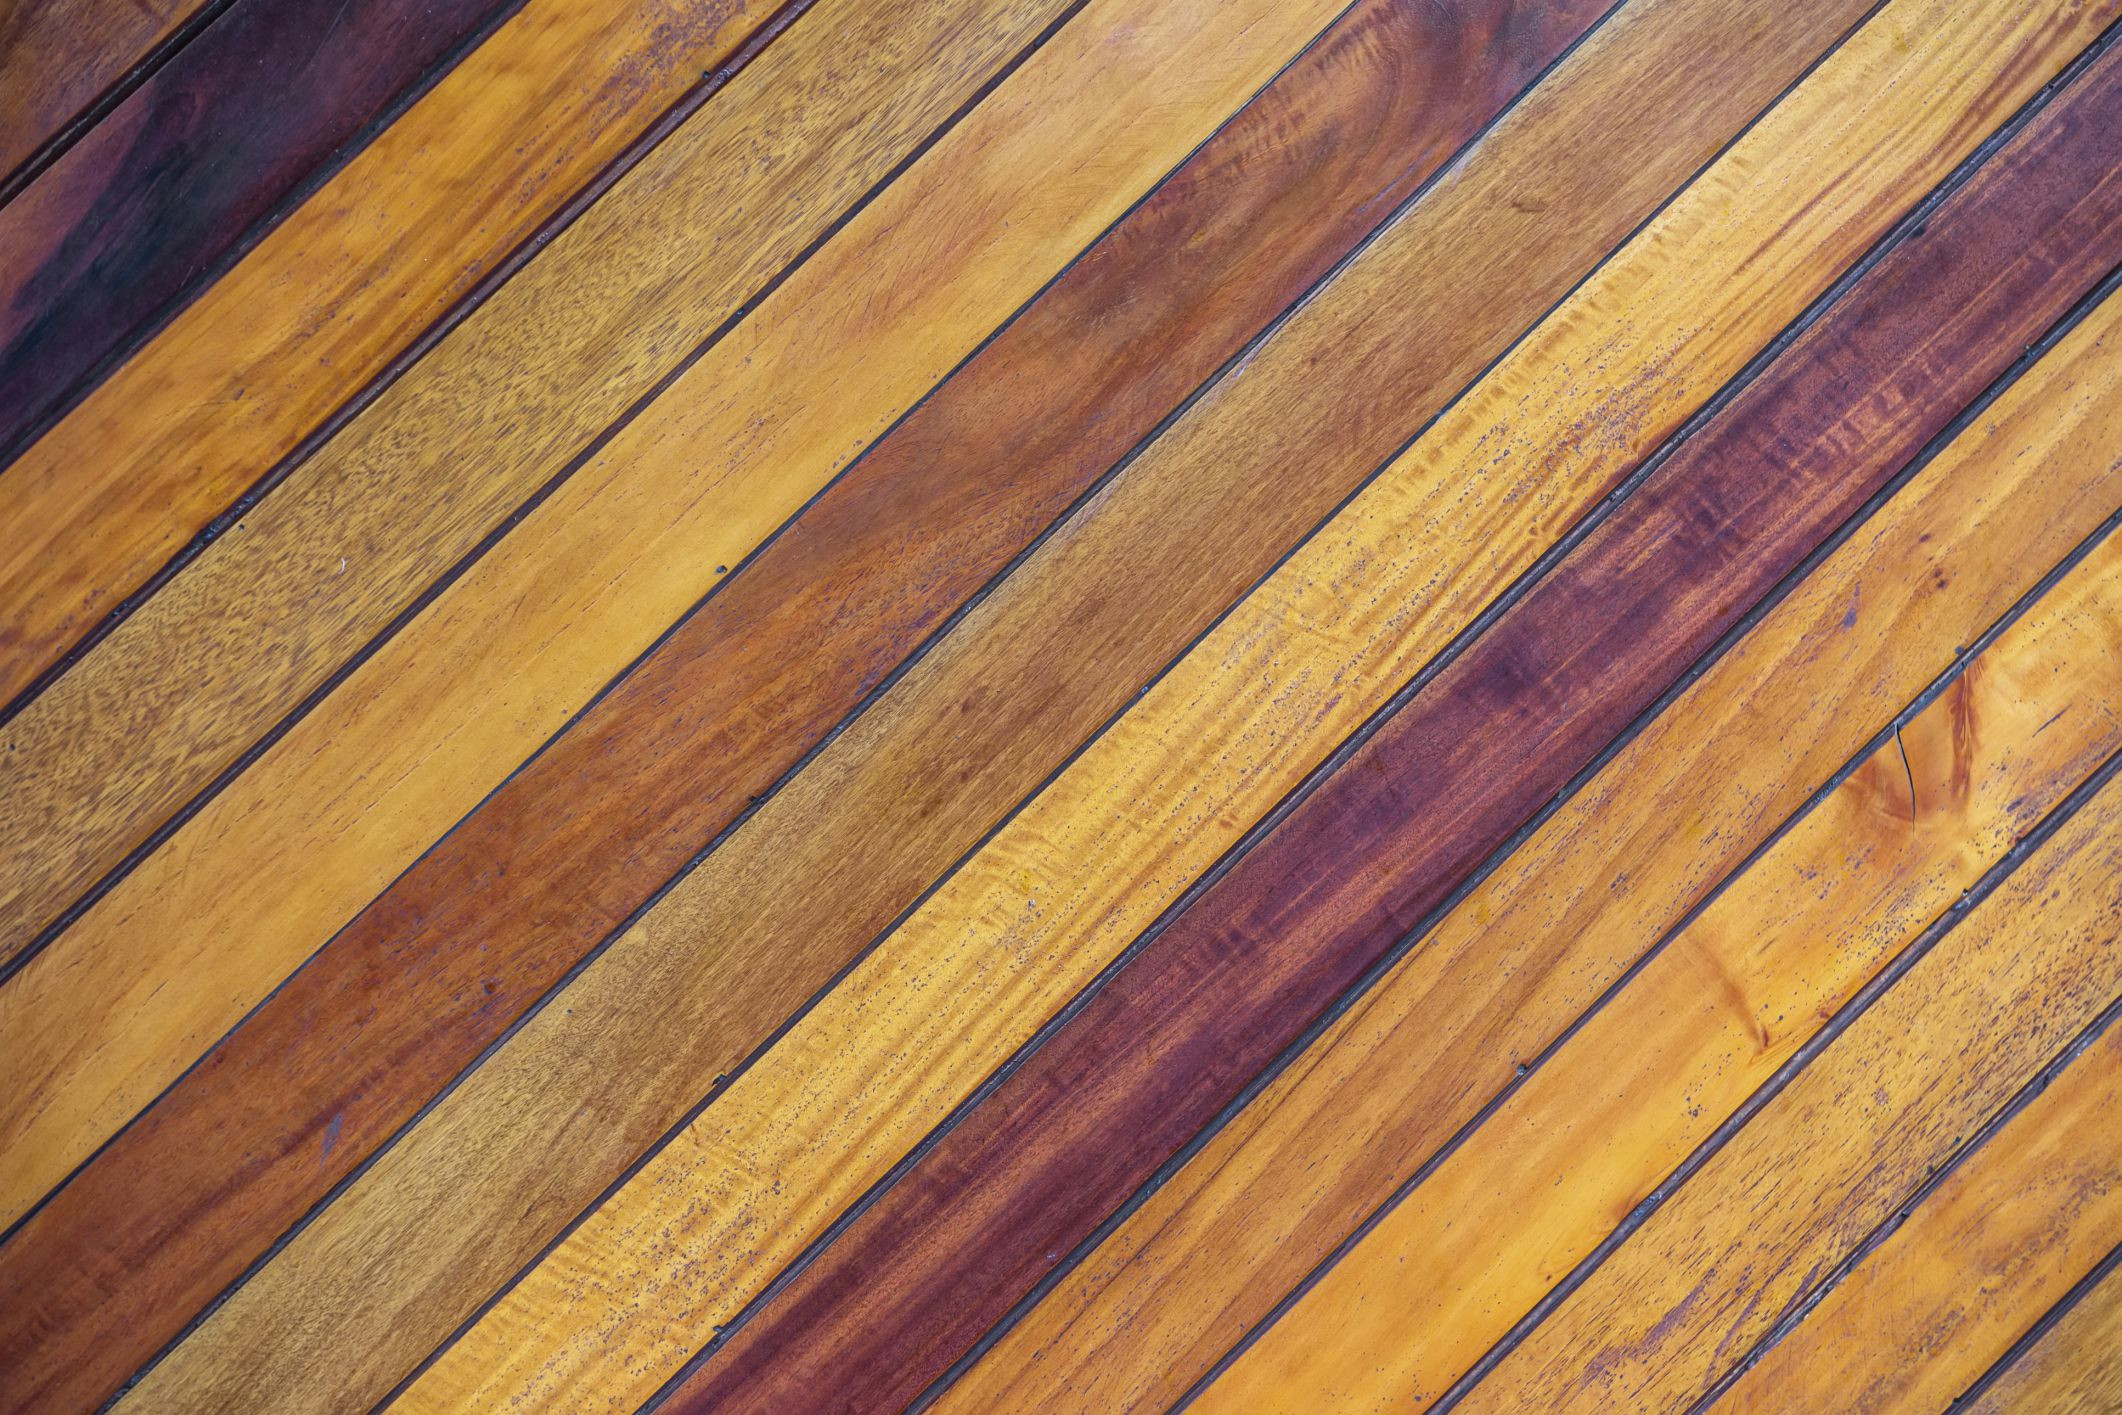 oak hardwood floor filler of subfloor repair and floor leveling techniques intended for uneven wooden flooring 170024909 56a4a1853df78cf7728353ab